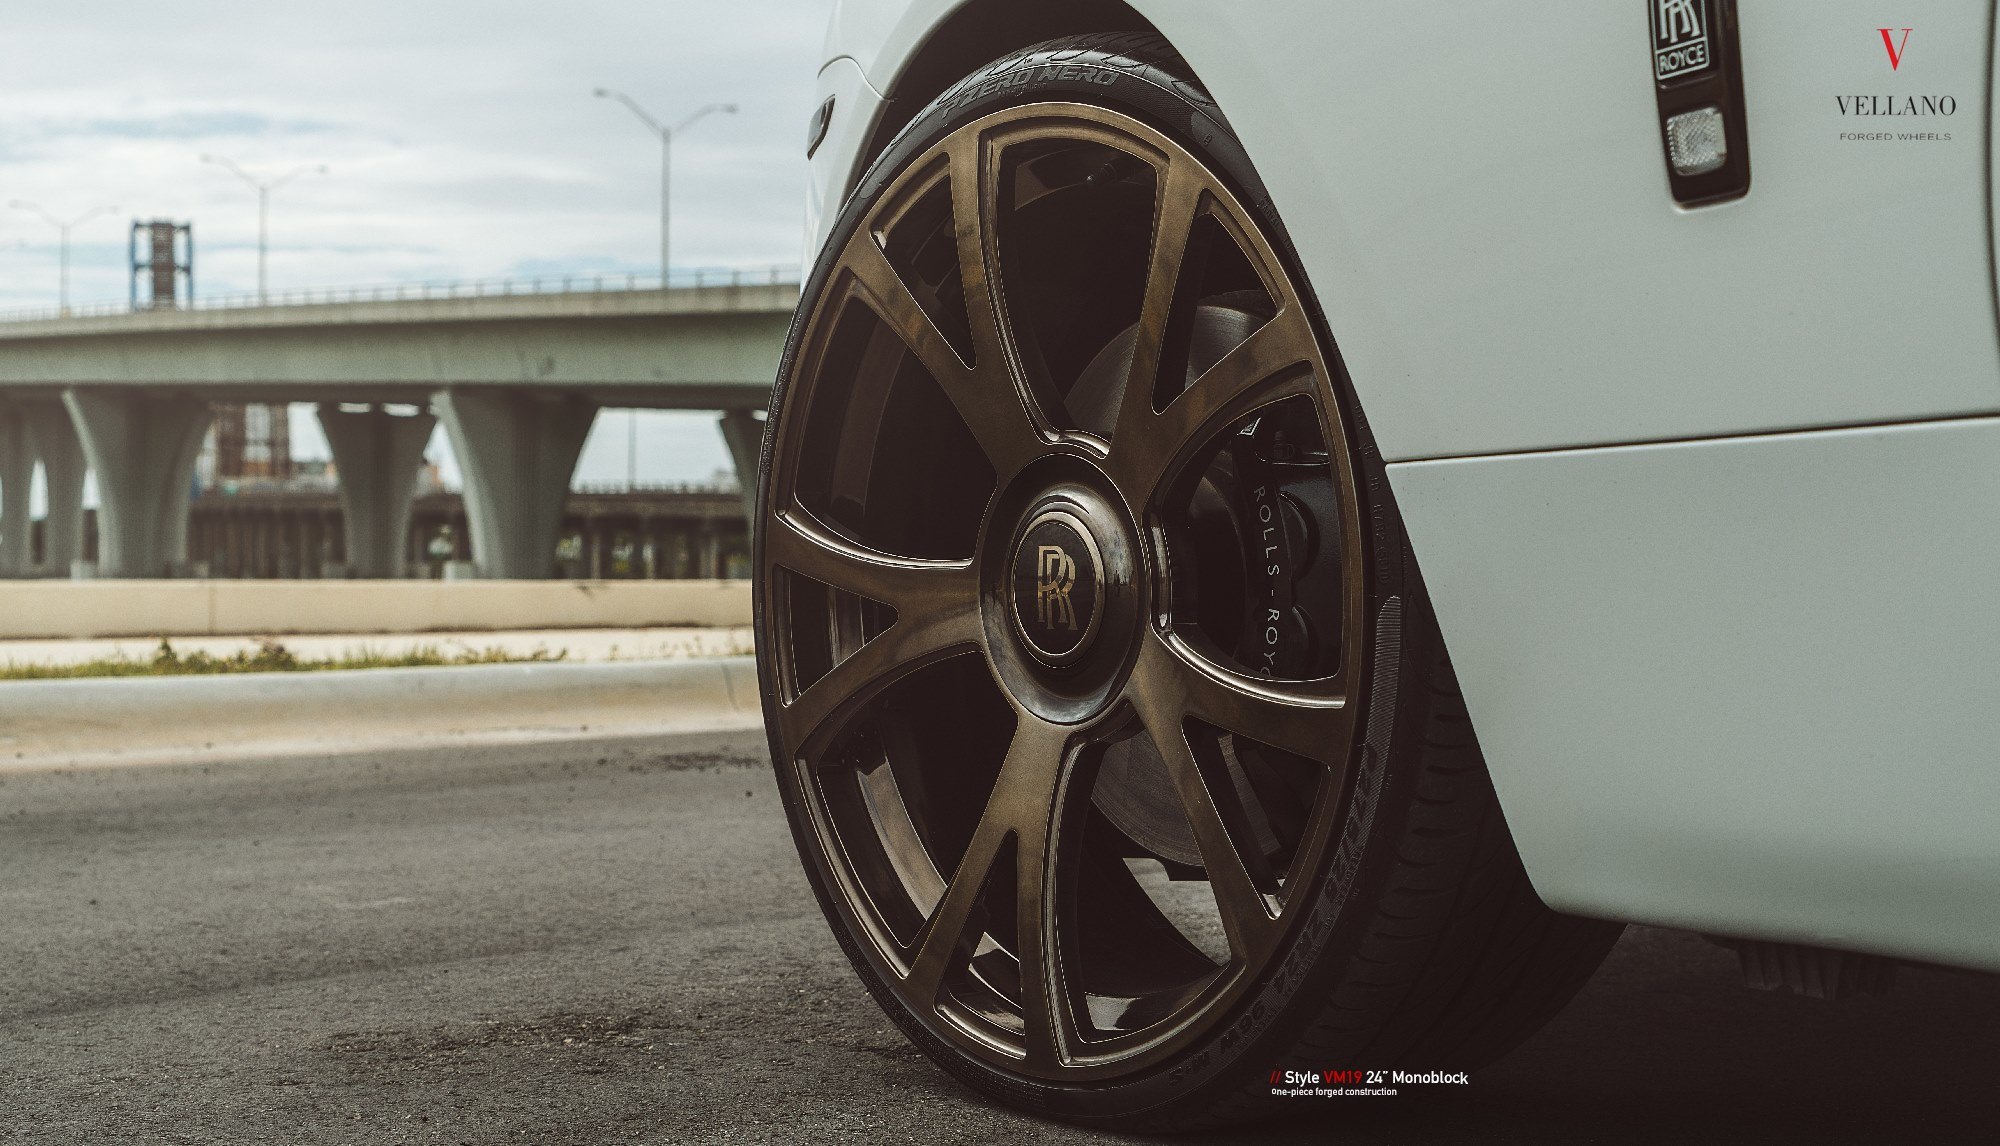 White Rolls Royce Wraith with Pirelli Tires - Photo by Vellano